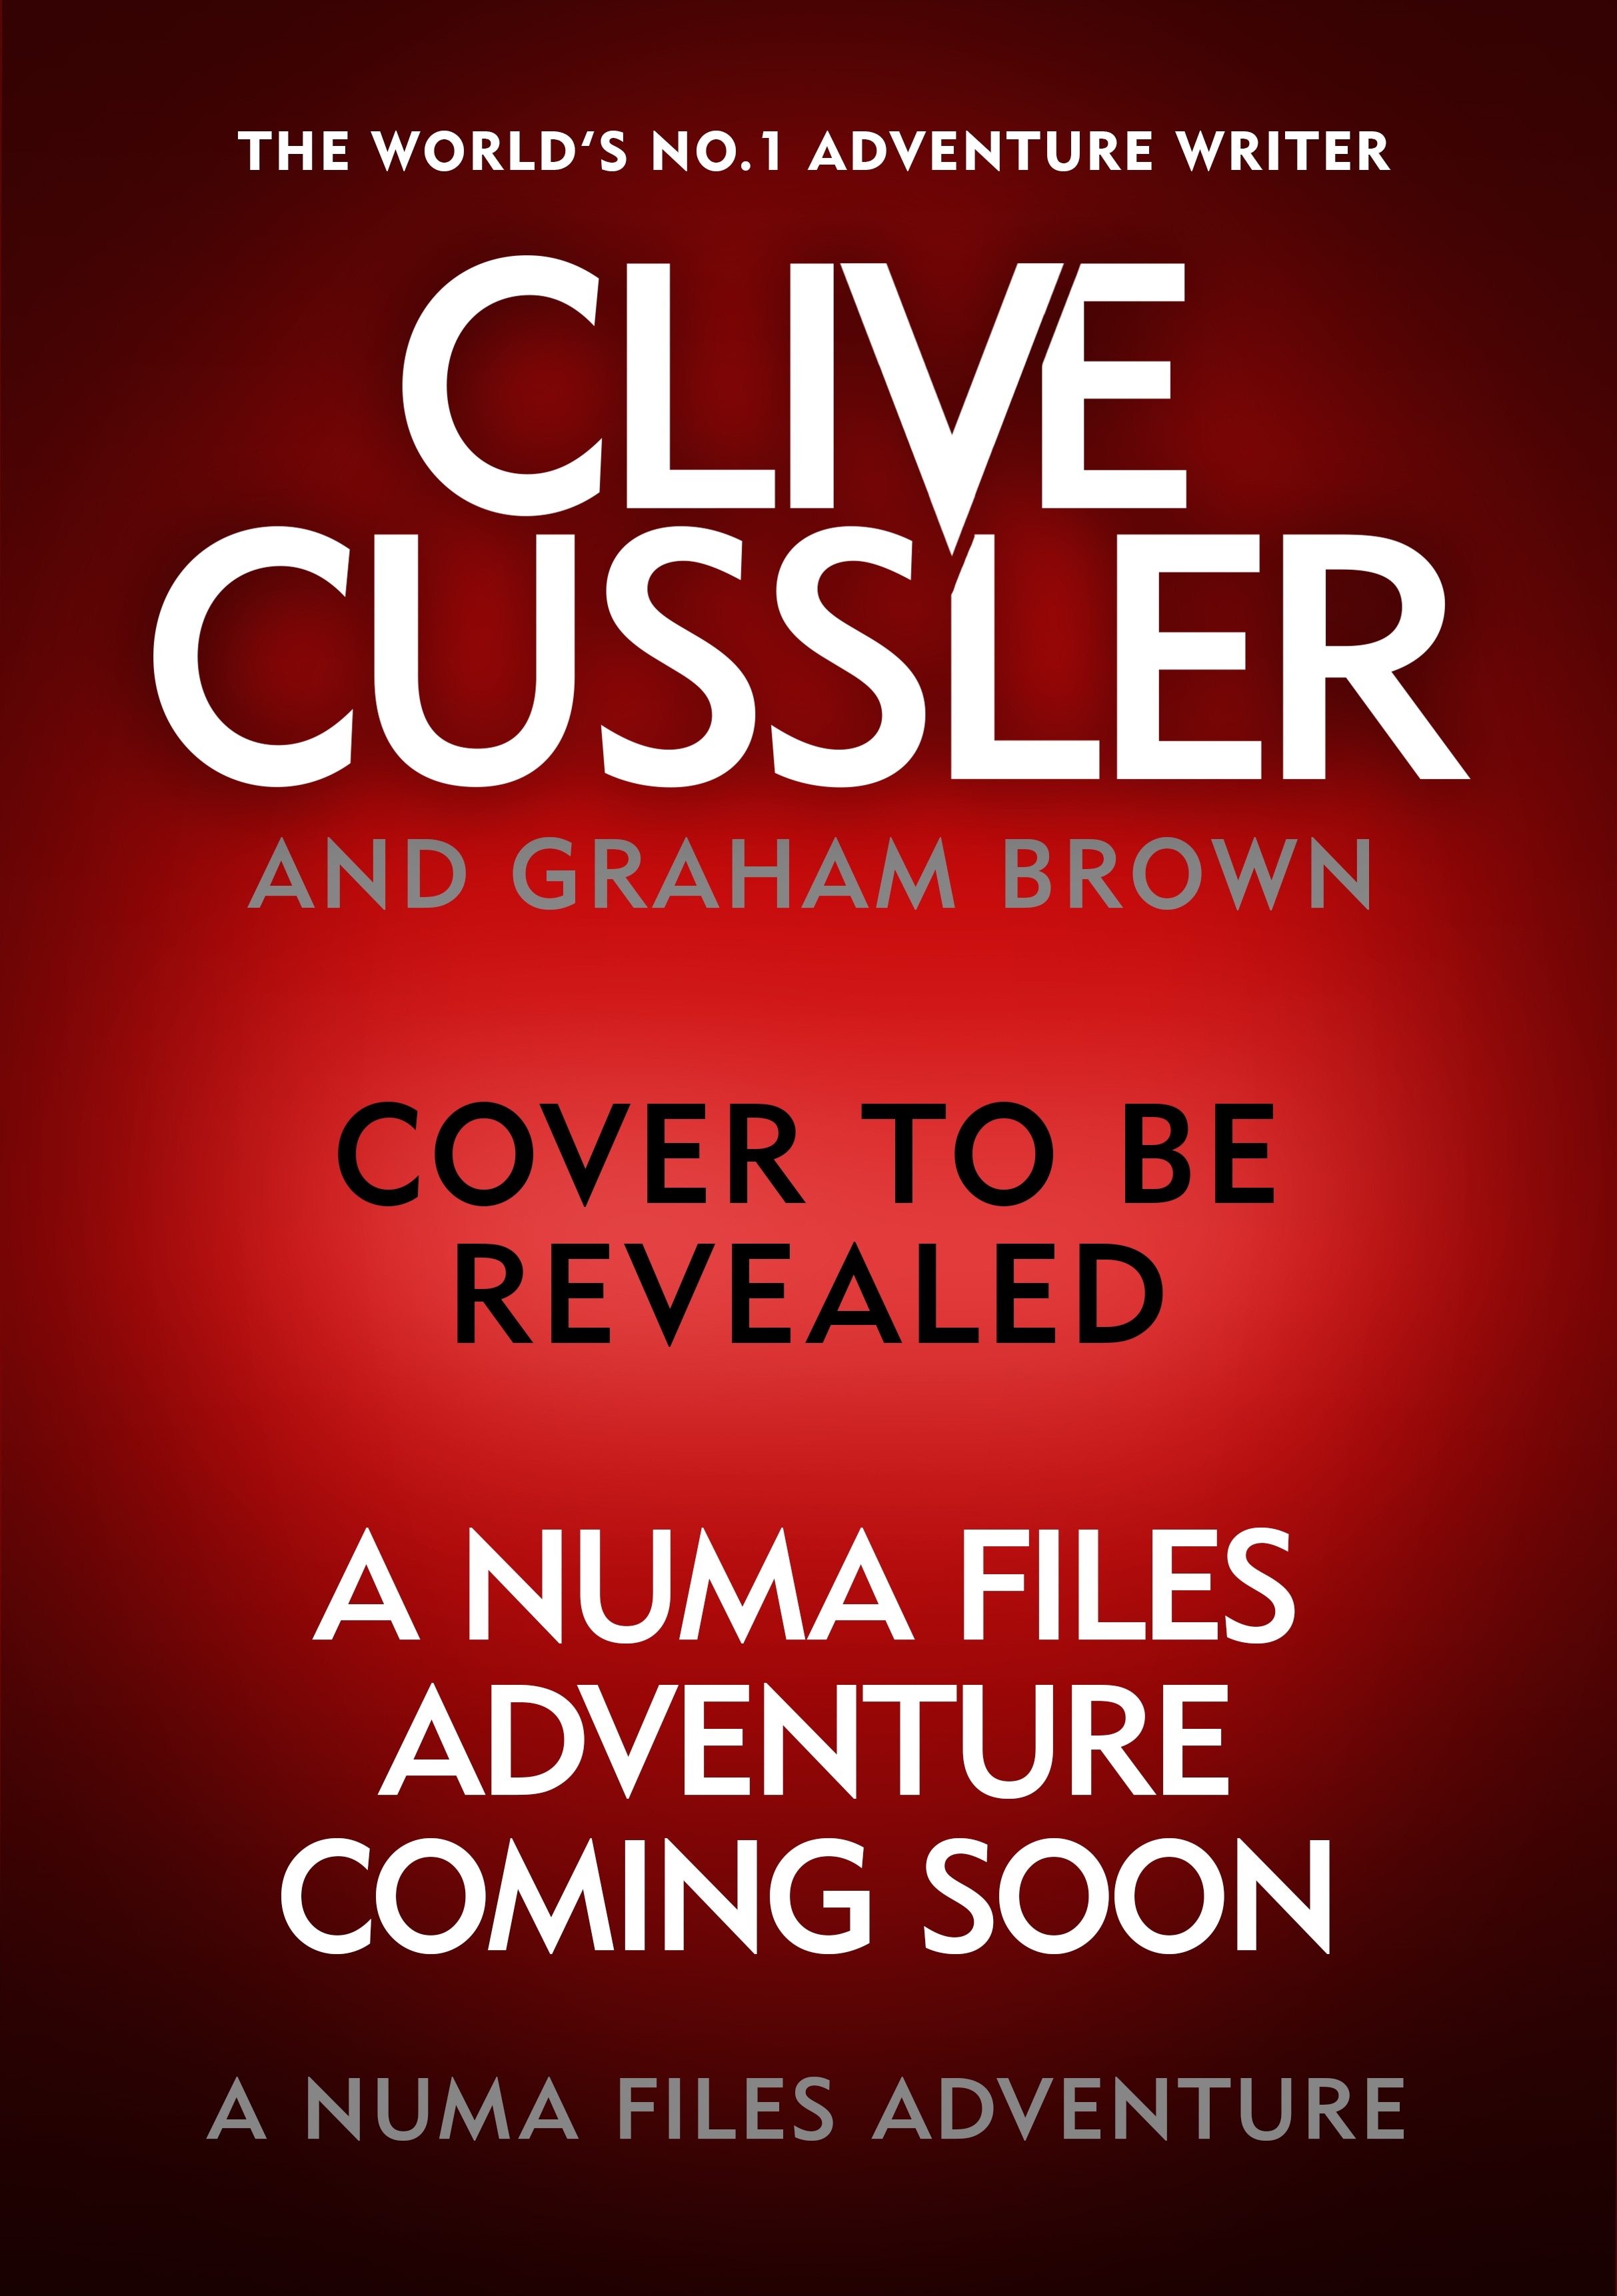 Book “Untitled Cussler NUMA #19” by Clive Cussler, Graham Brown — March 17, 2022